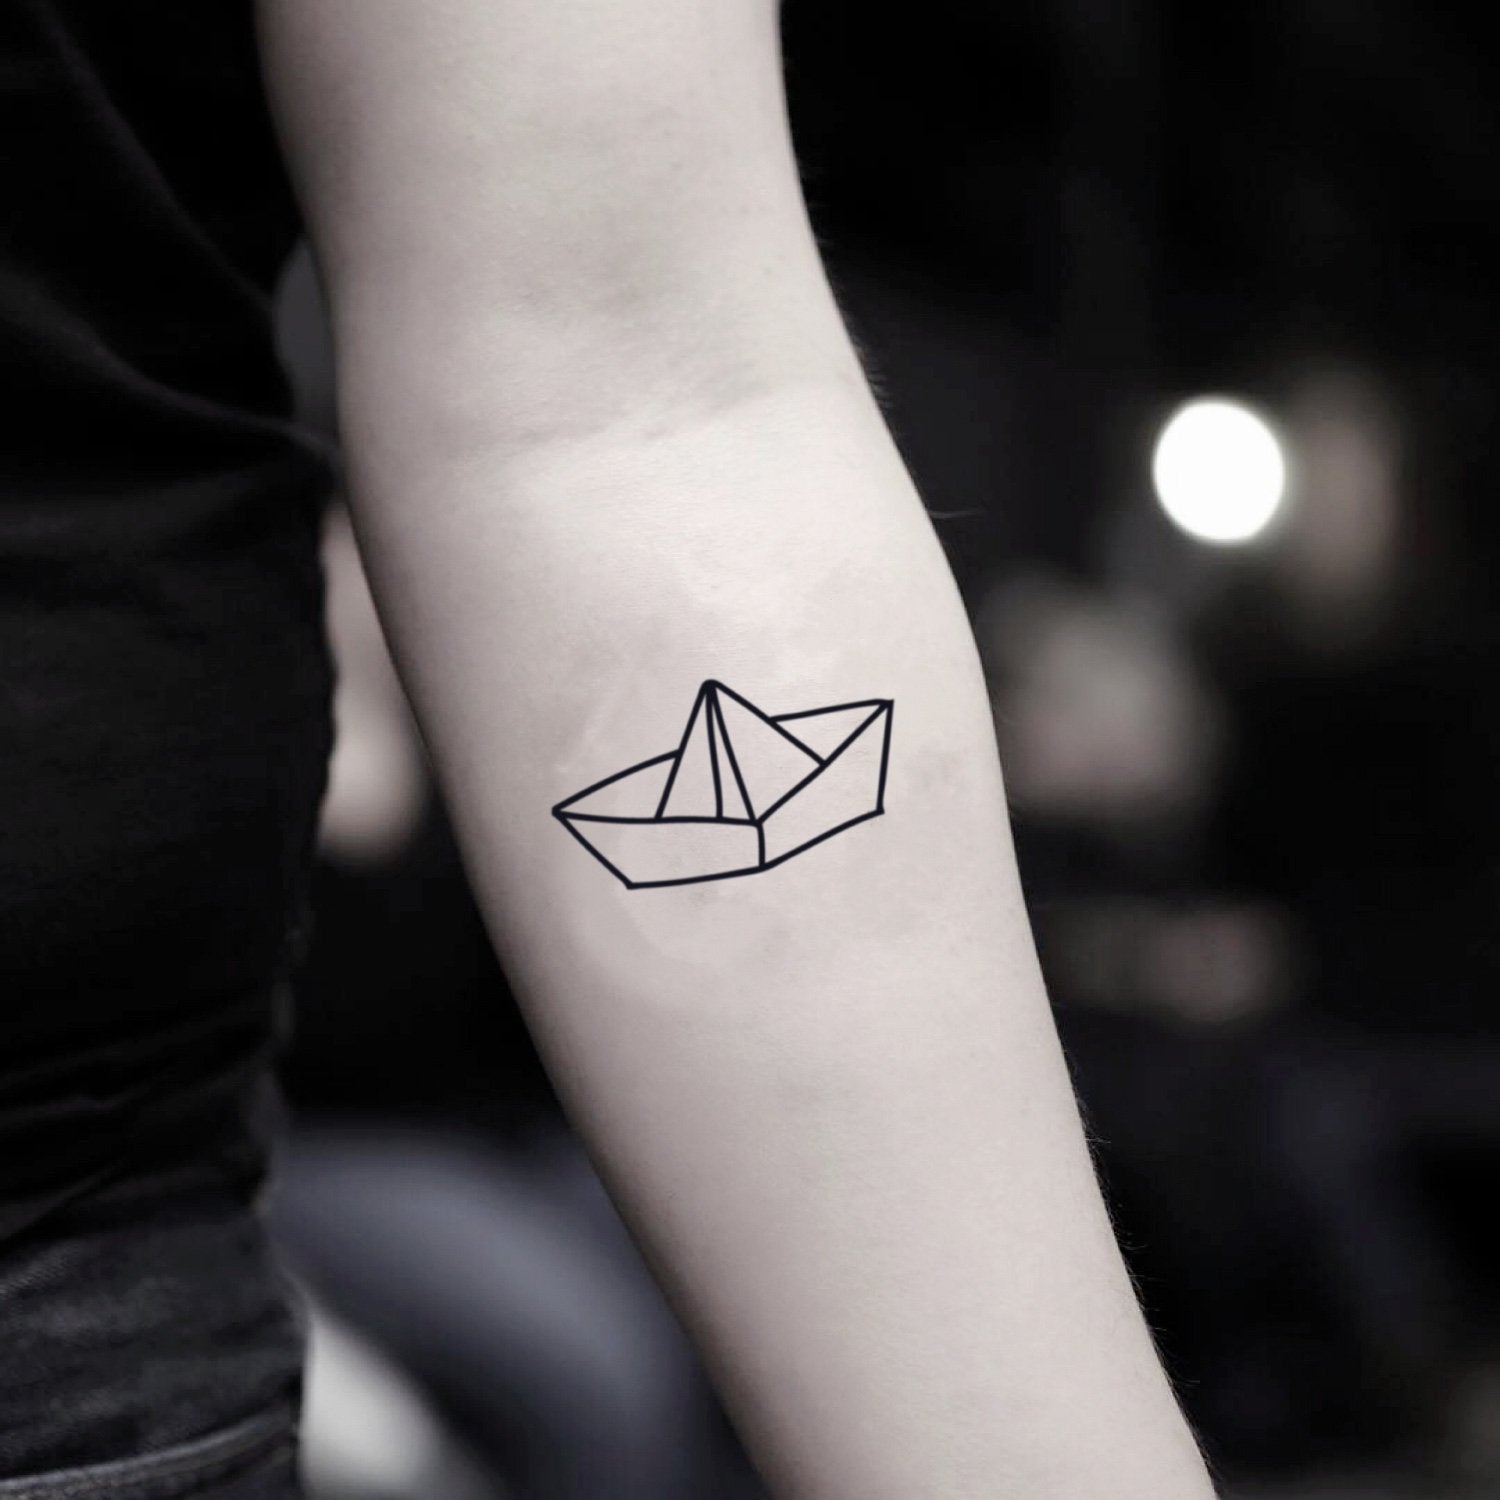 fake small paper boat minimalist temporary tattoo sticker design idea on inner arm